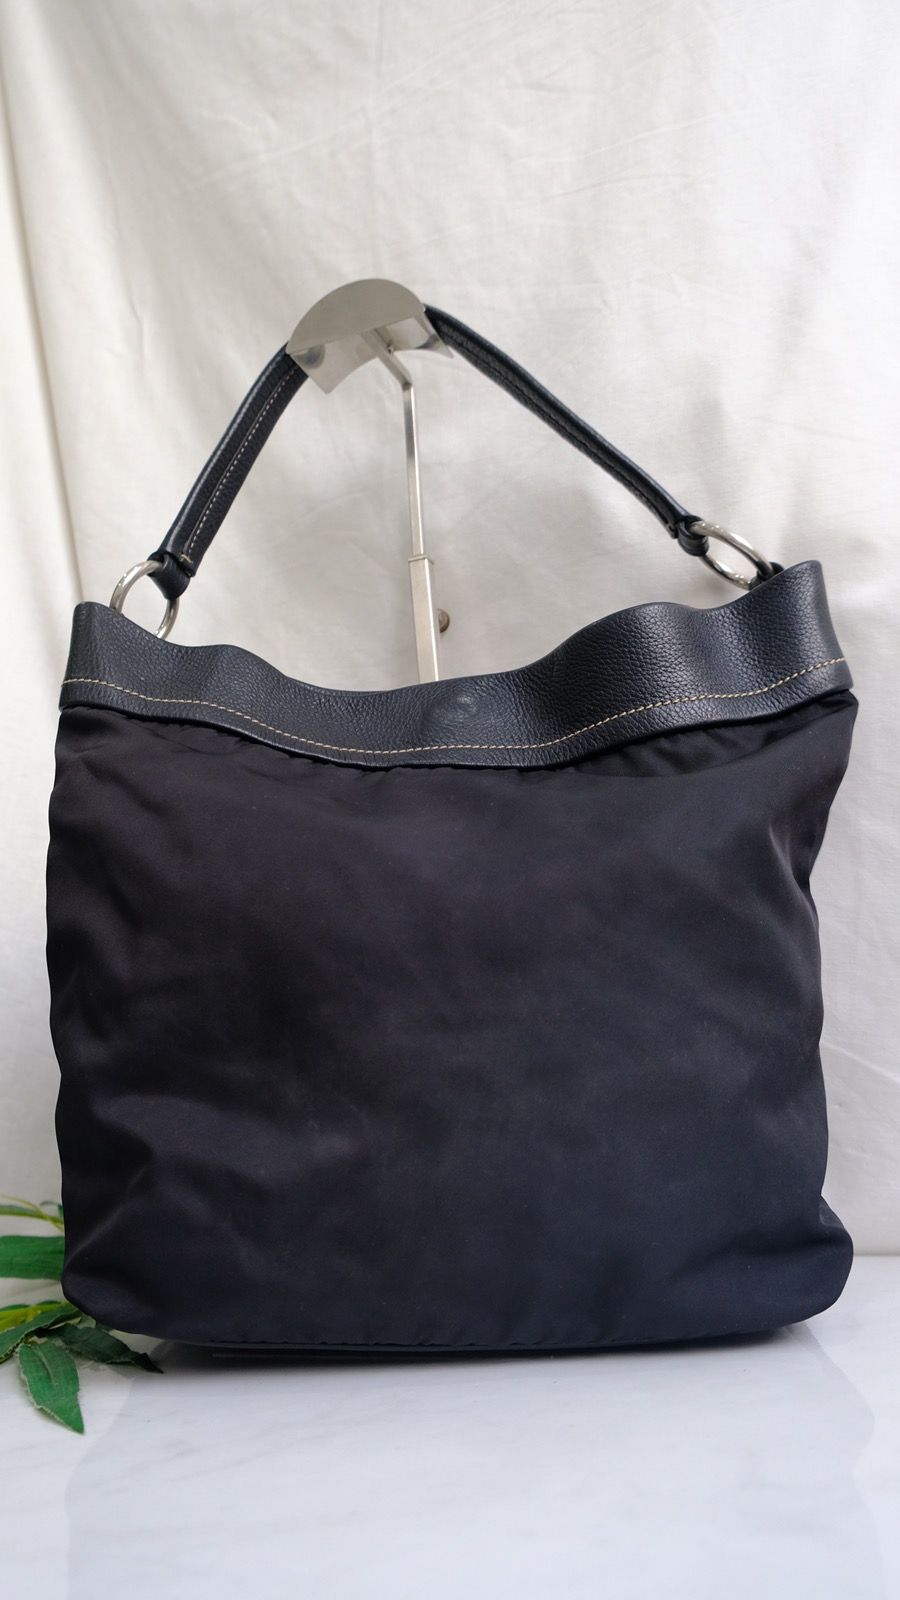 Authentic Prada black leather and nylon shoulder bag - 3